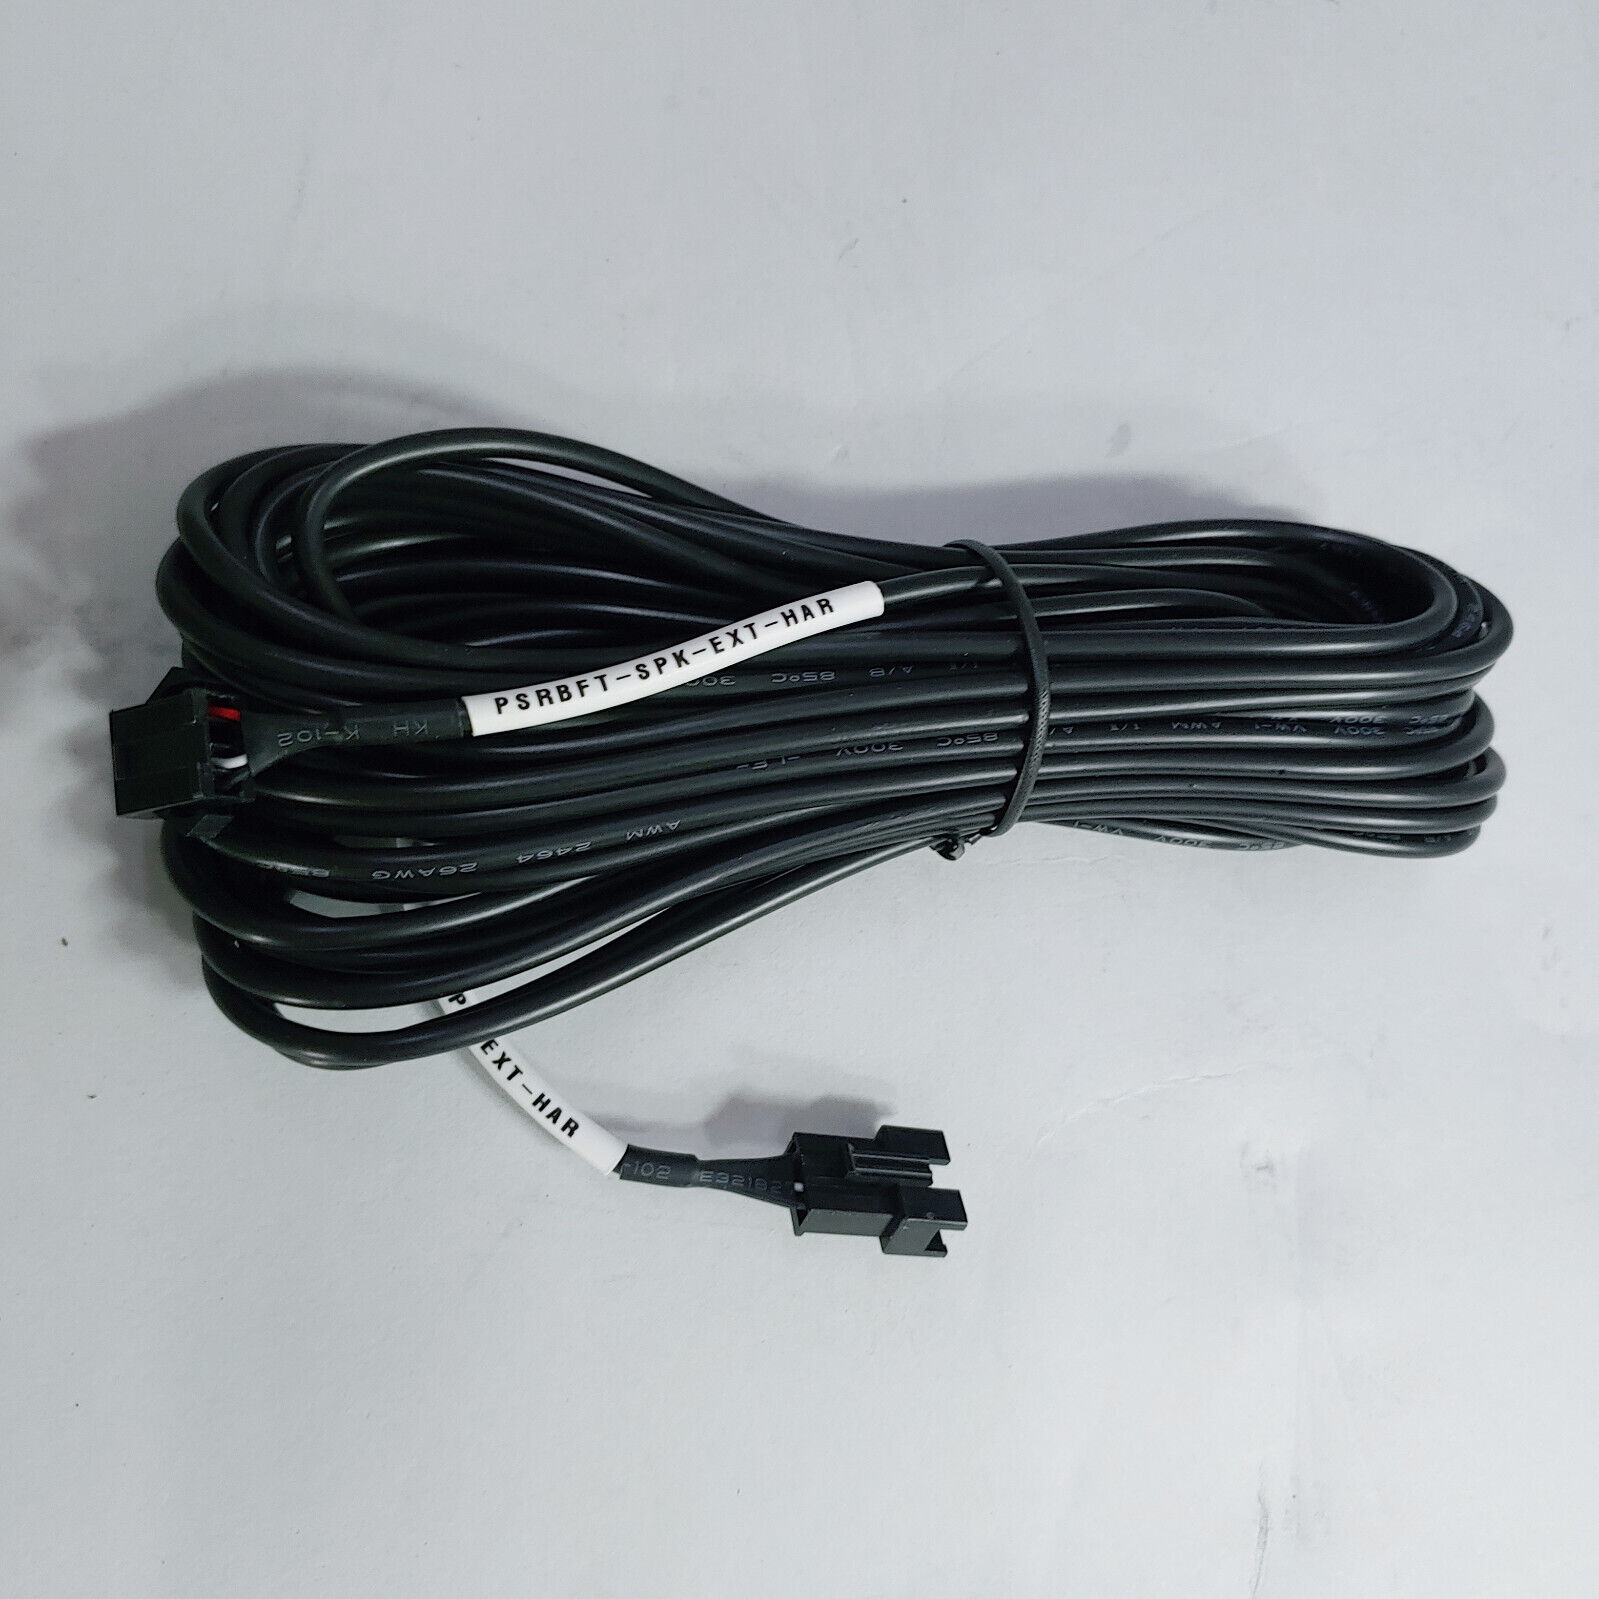 Thinkware PSRBFT-SPK-EXT-HAR Dash Cam Hardwire Installation Cable